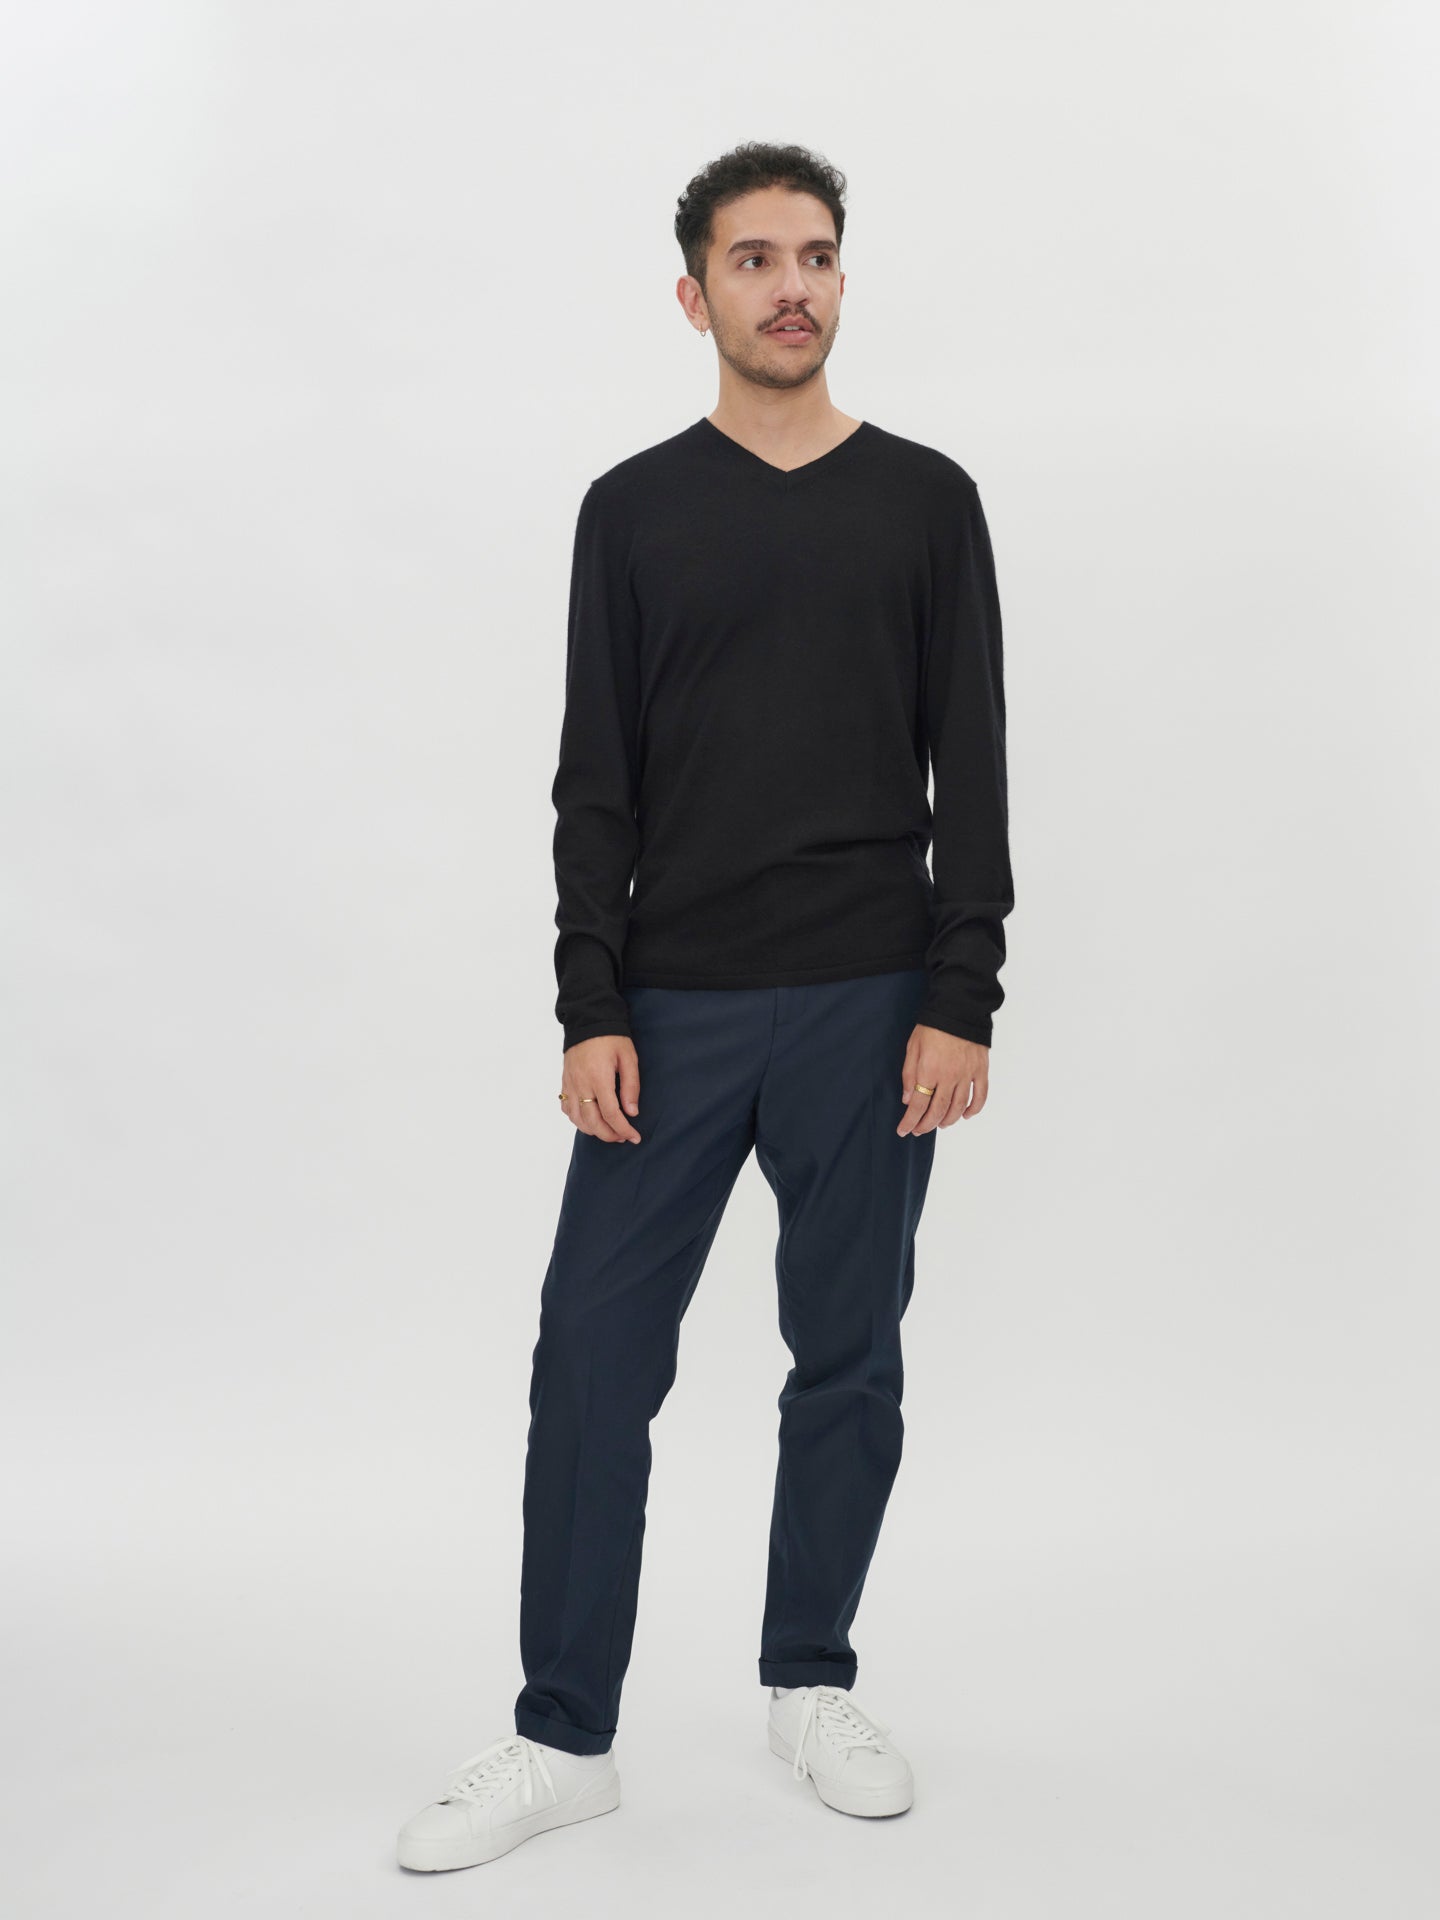 Men's Silk Cashmere V-Neck Black  - Gobi Cashmere 